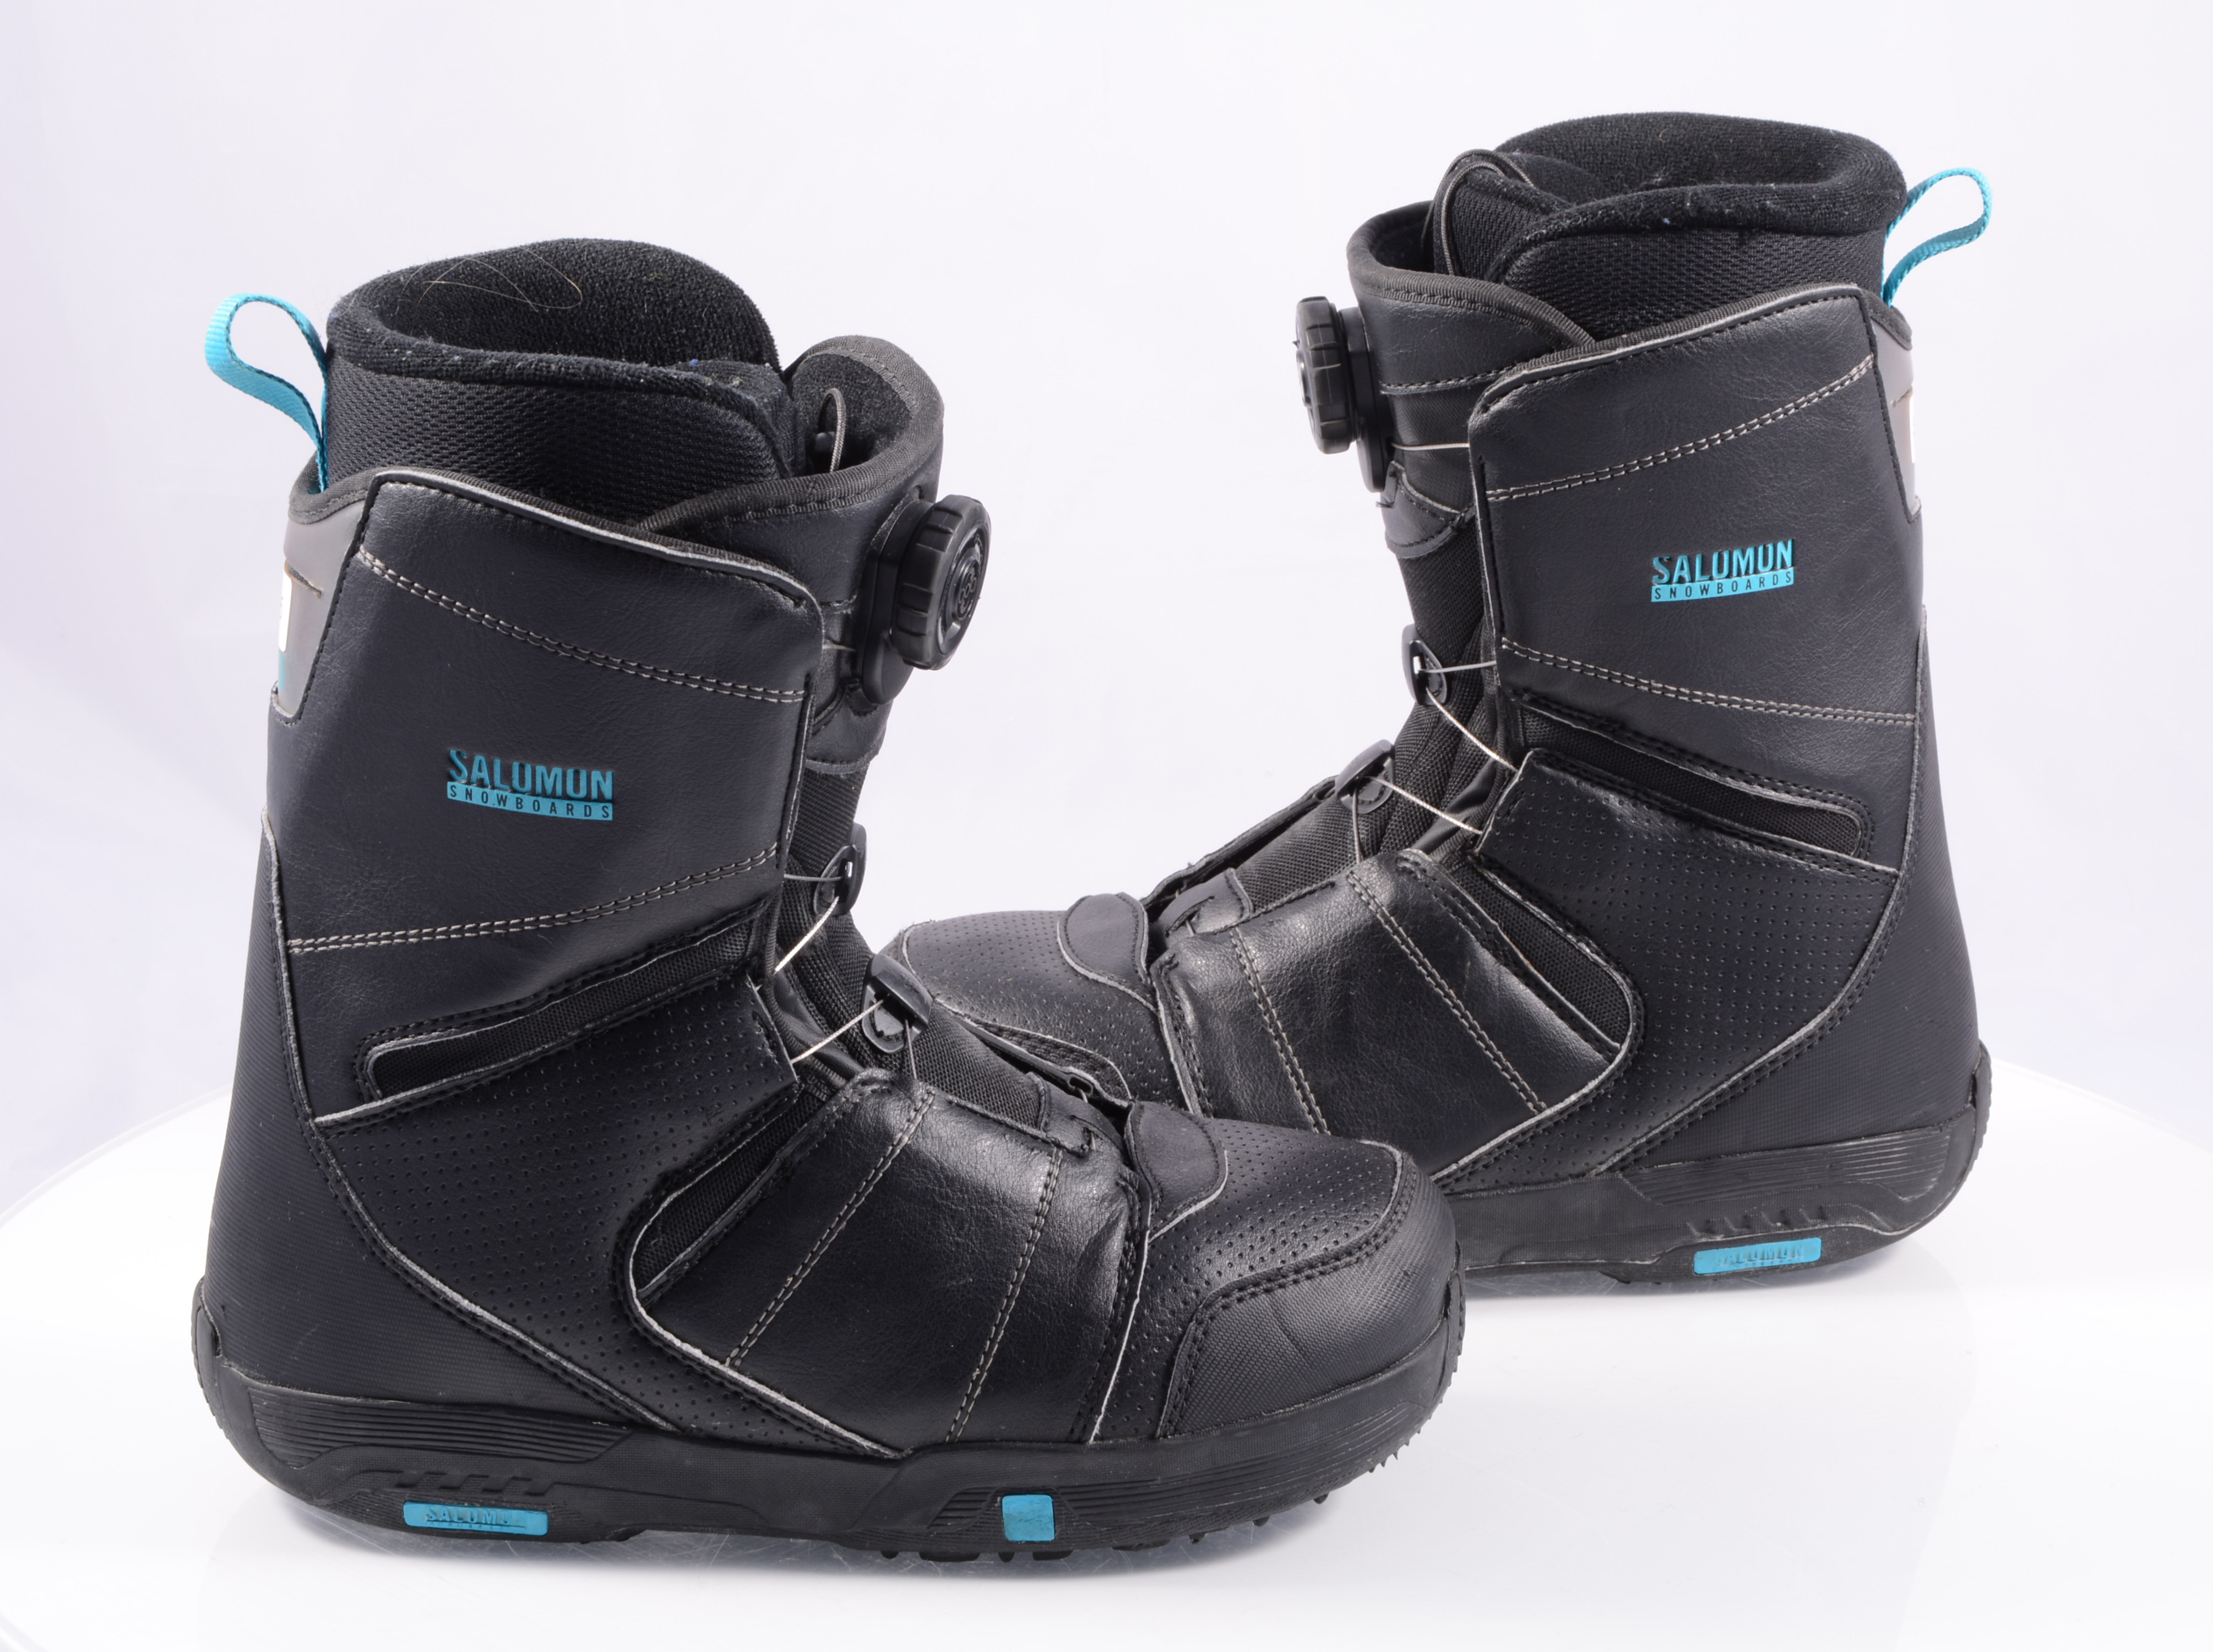 snowboard boots FACTION technology, BLACK/blue - Mardosport.com